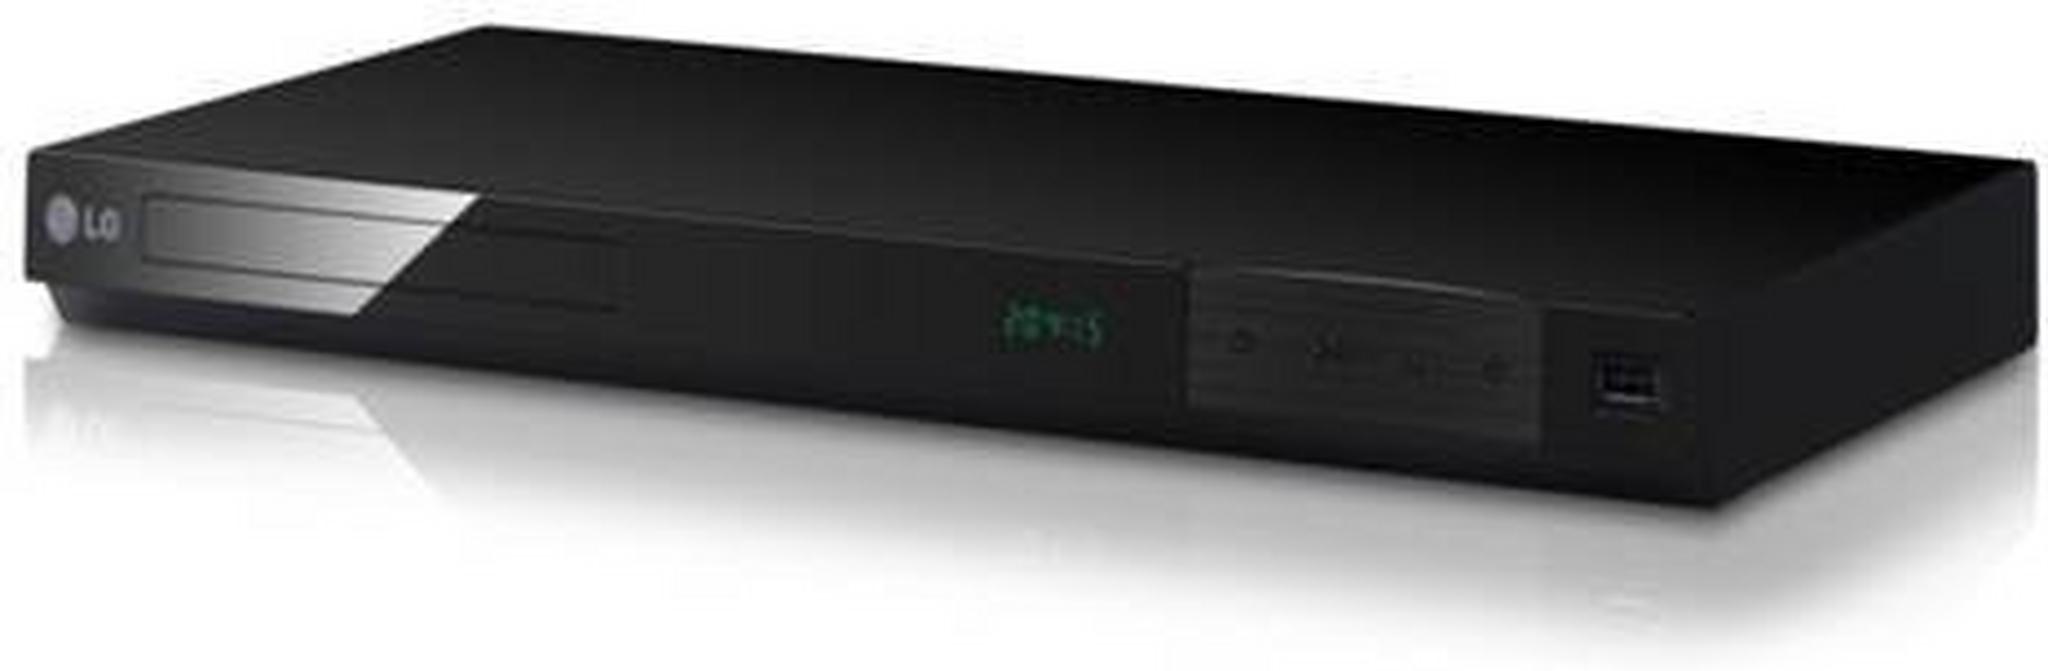 LG DP842H Full HD DVD Player with USB Recording - Black